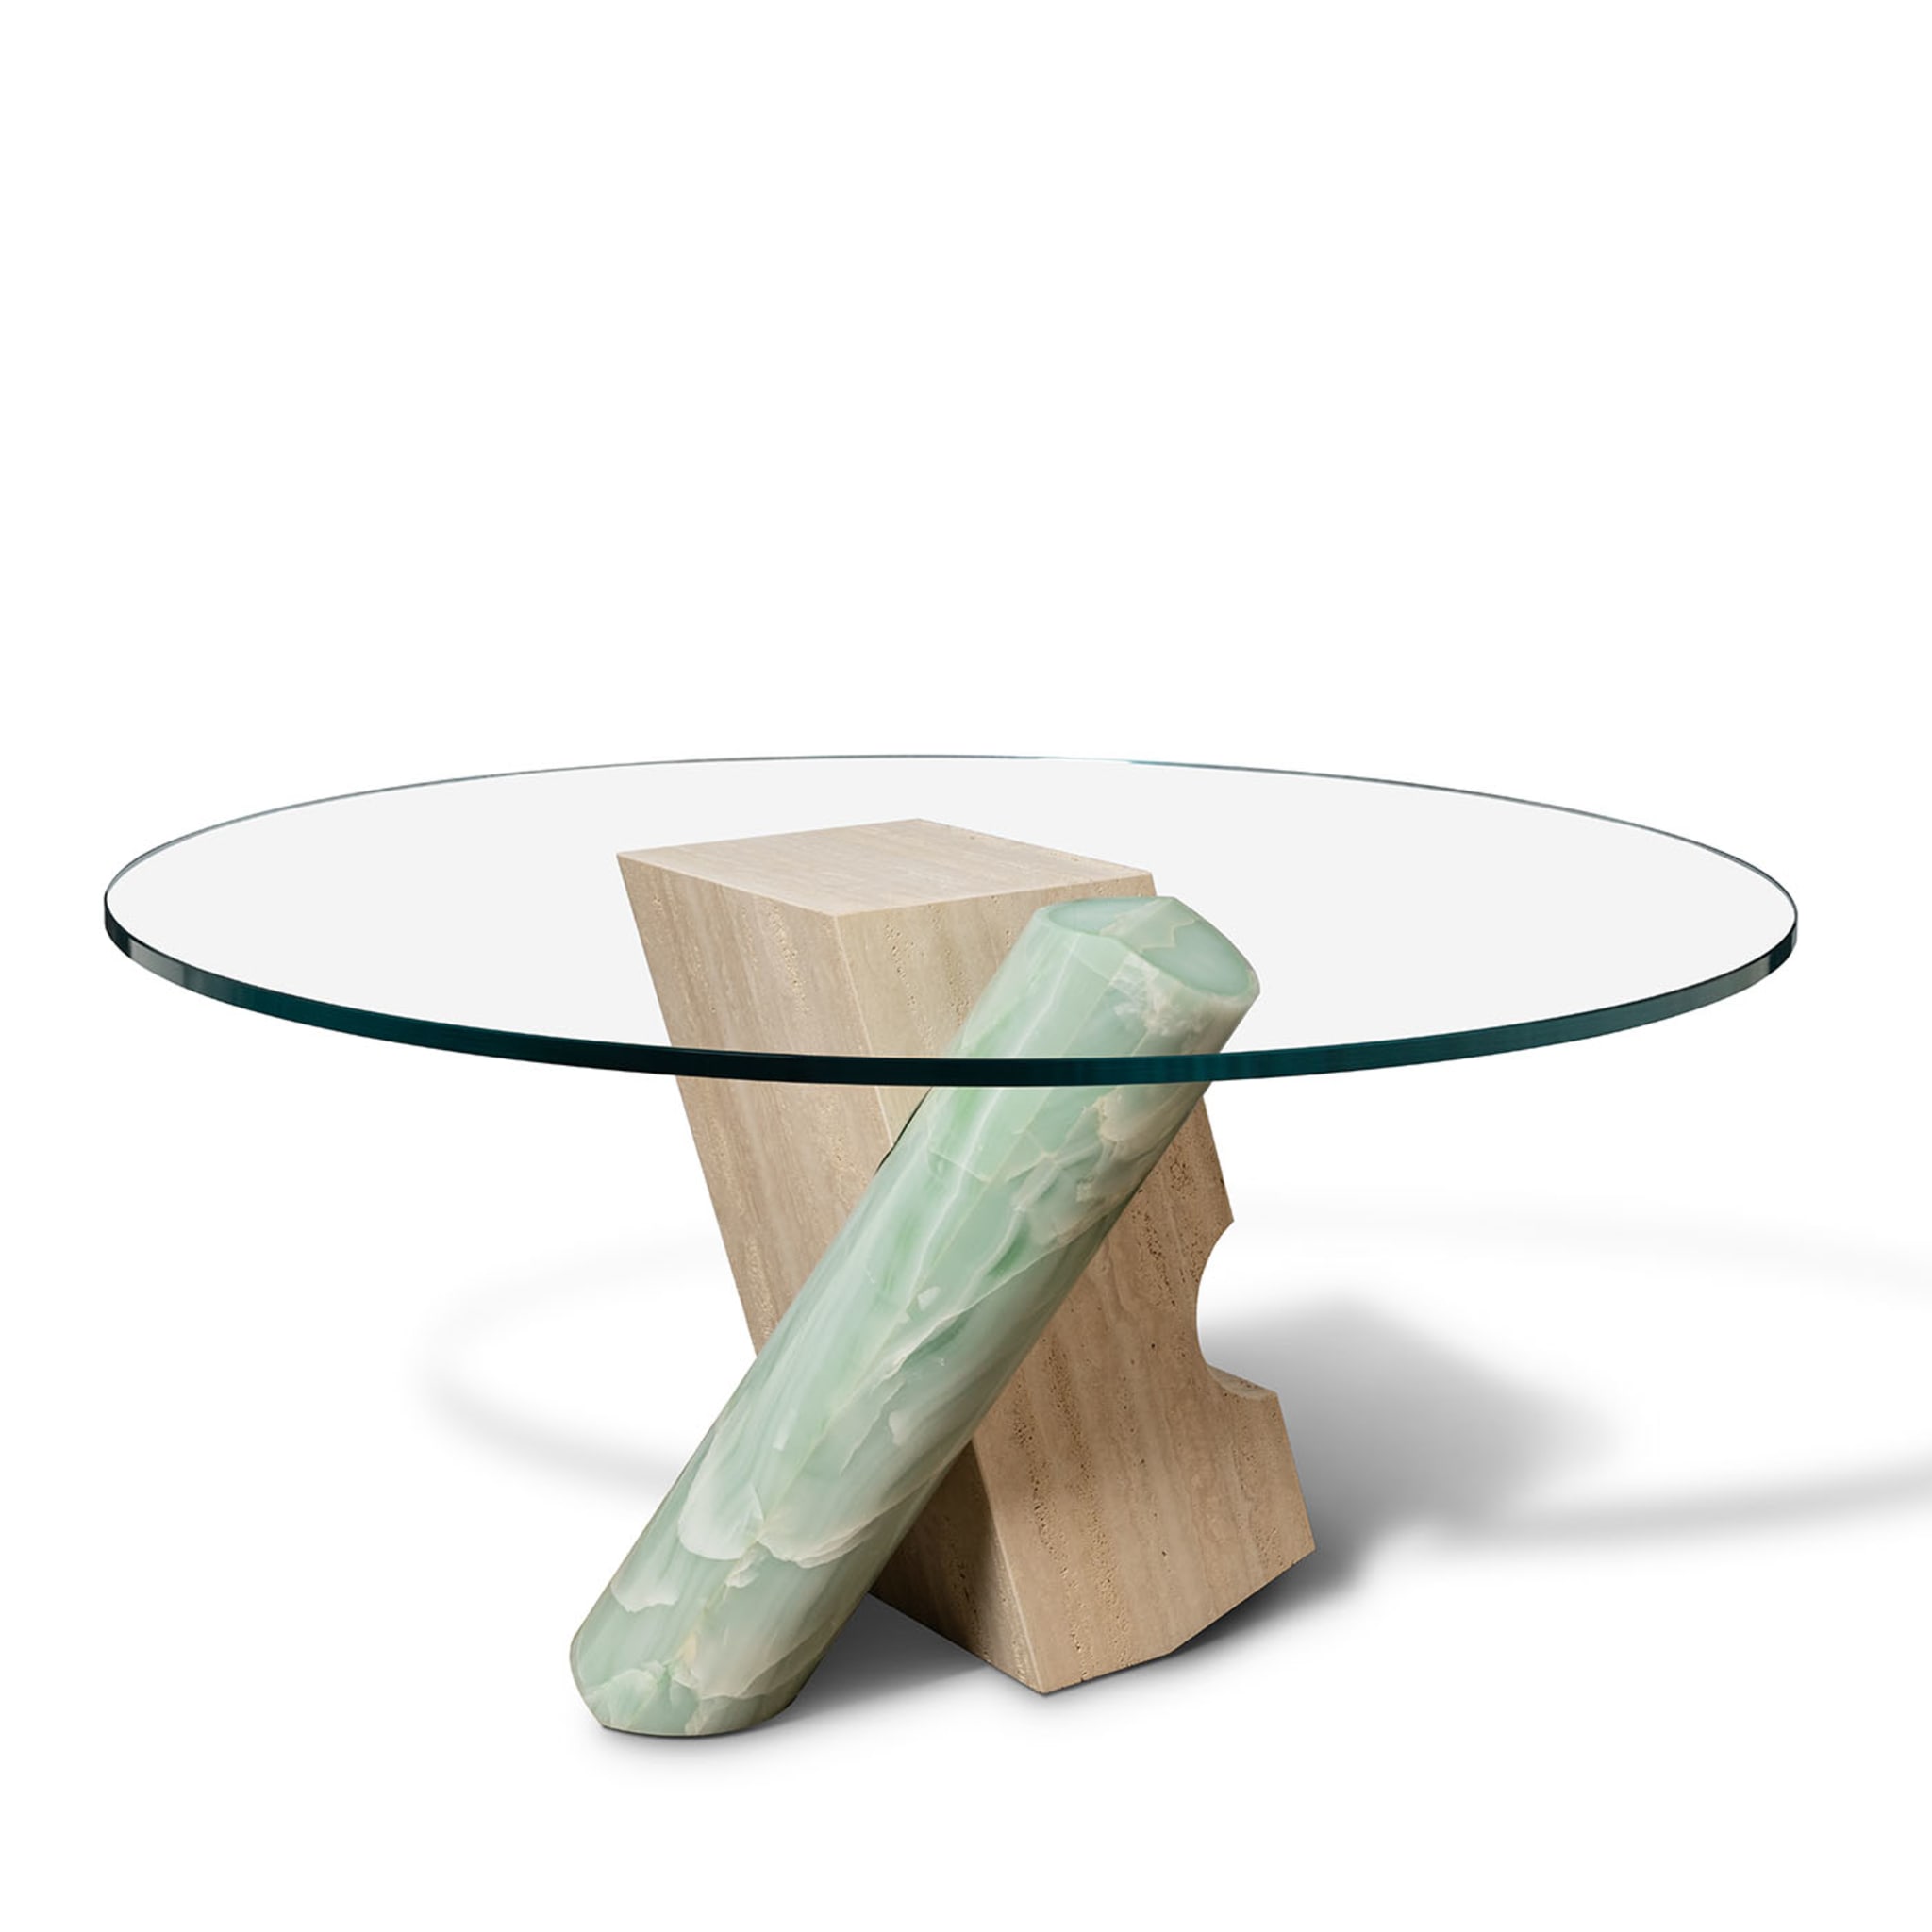 Pierce Living Round Table by Patricia Urquiola - Alternative view 1